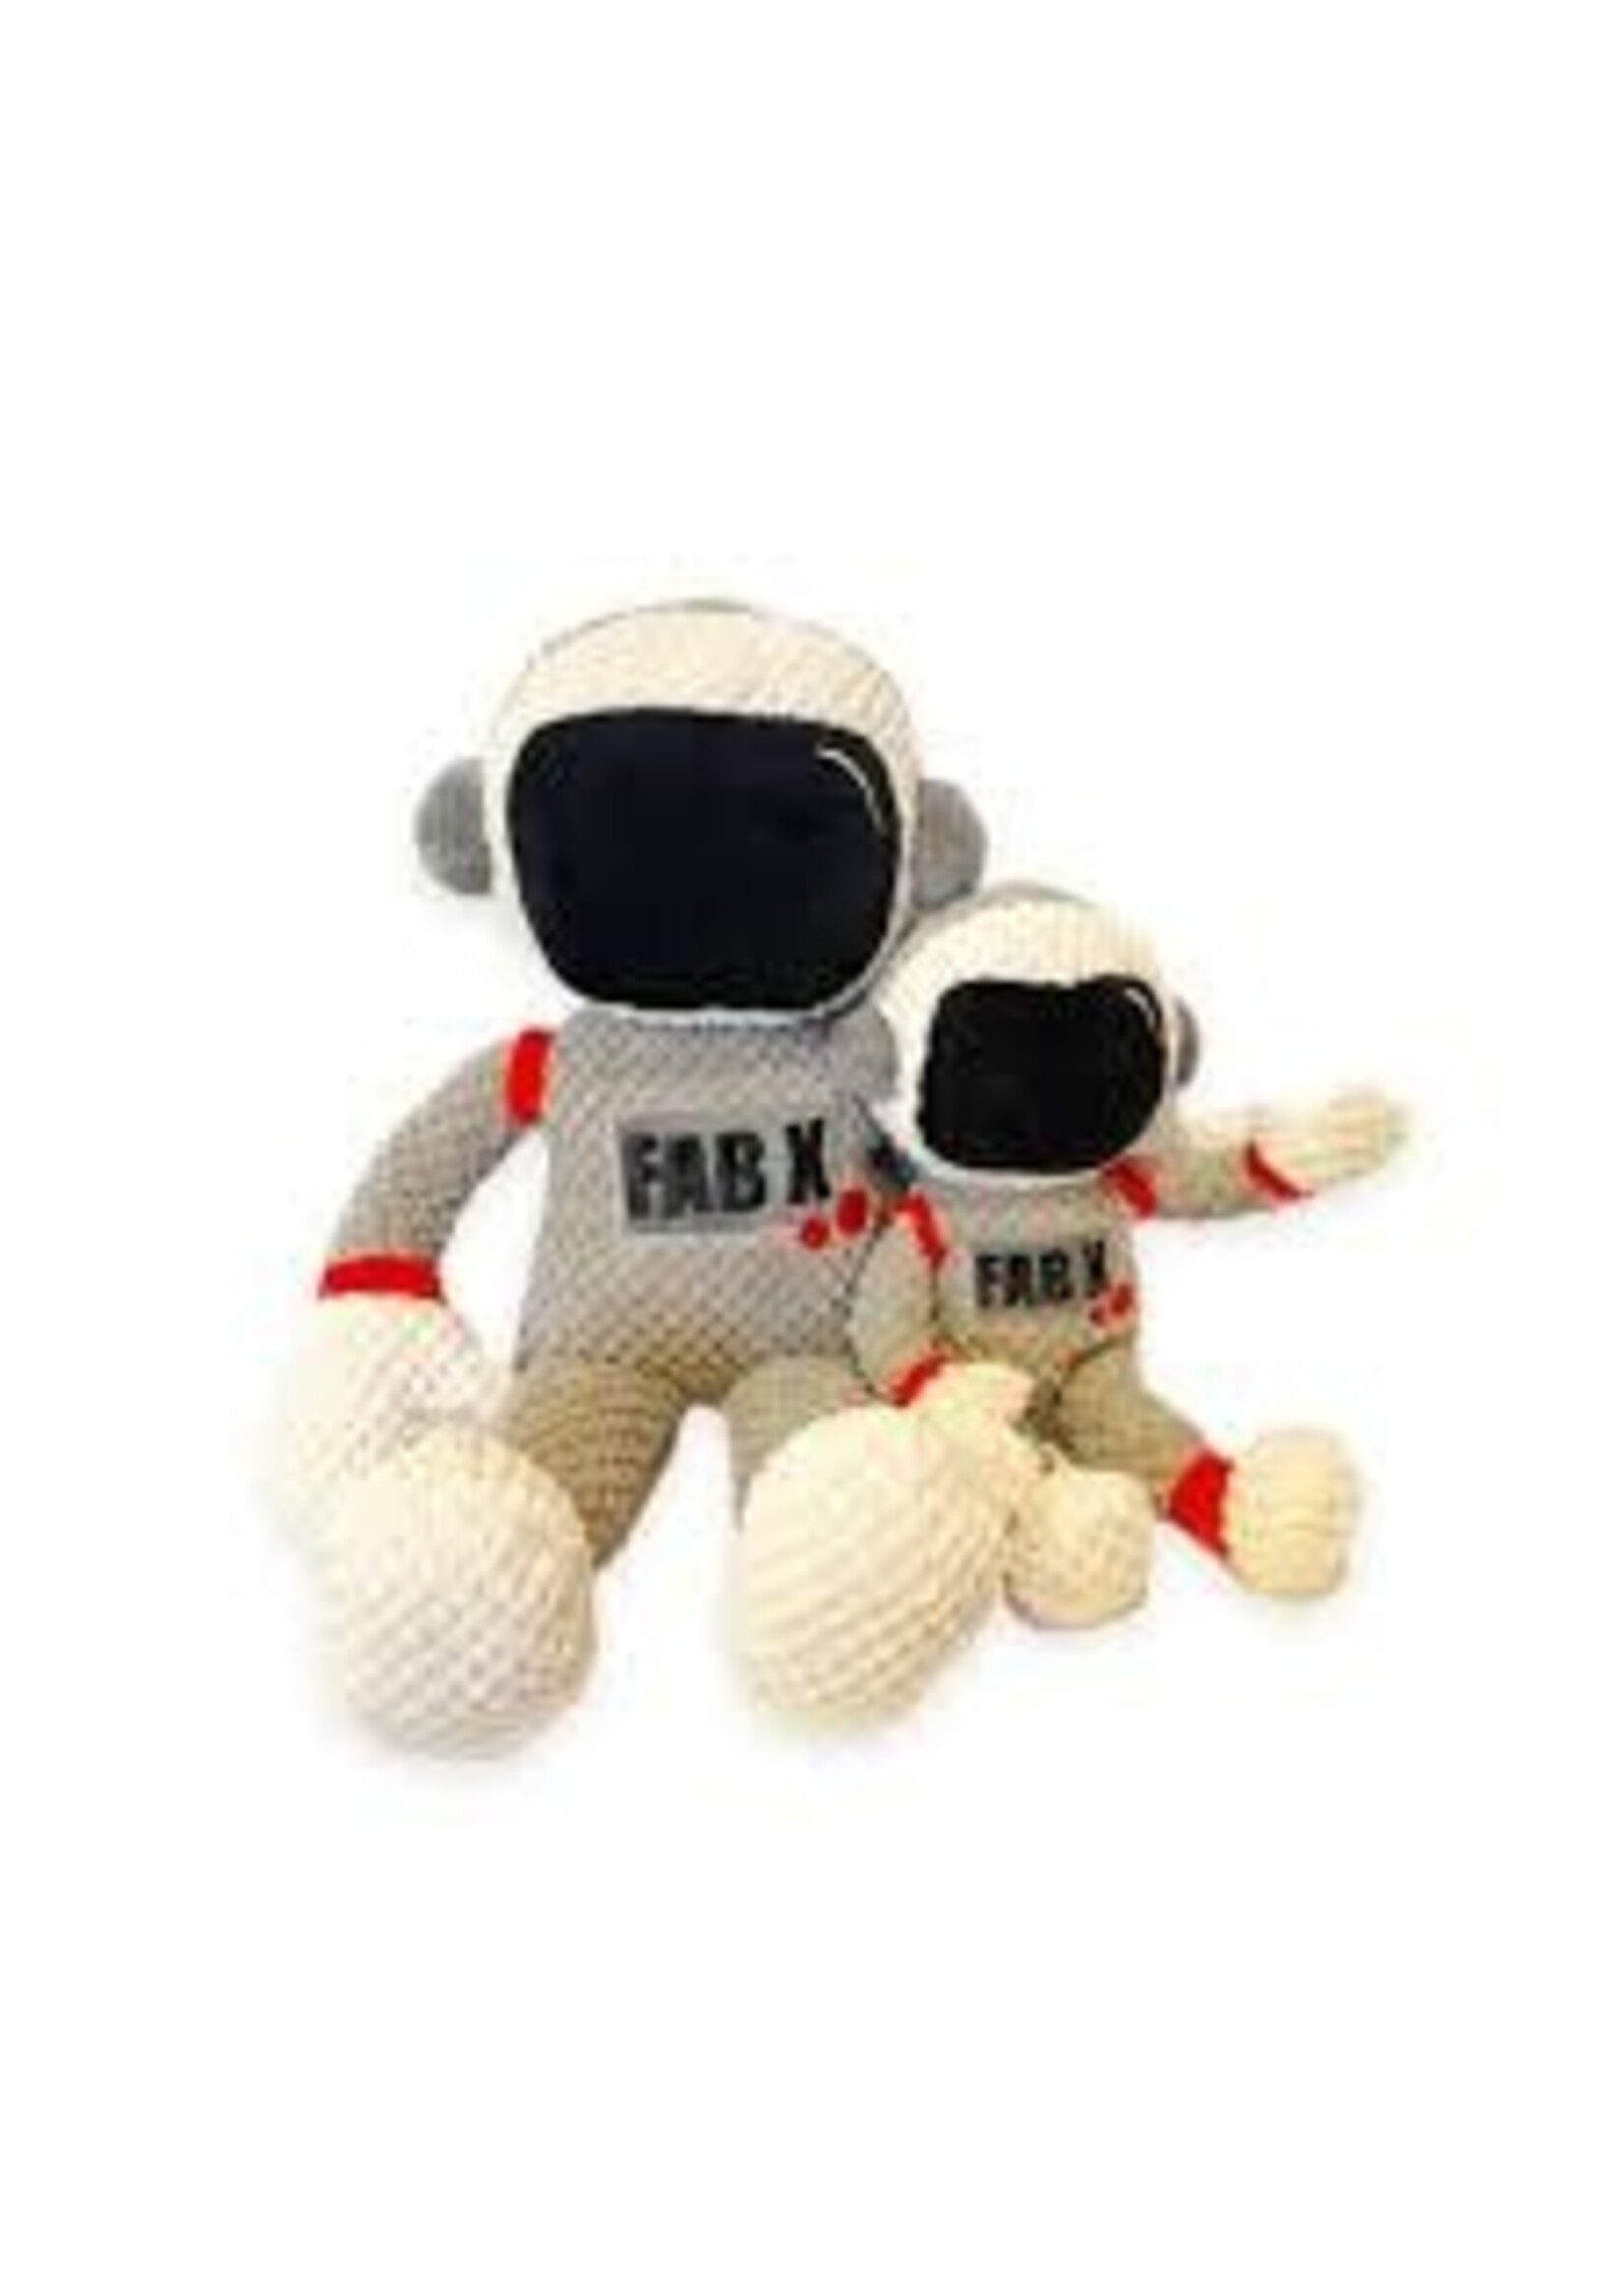 Fabdog Fabdog - Floppy Dog Toy Astronaut